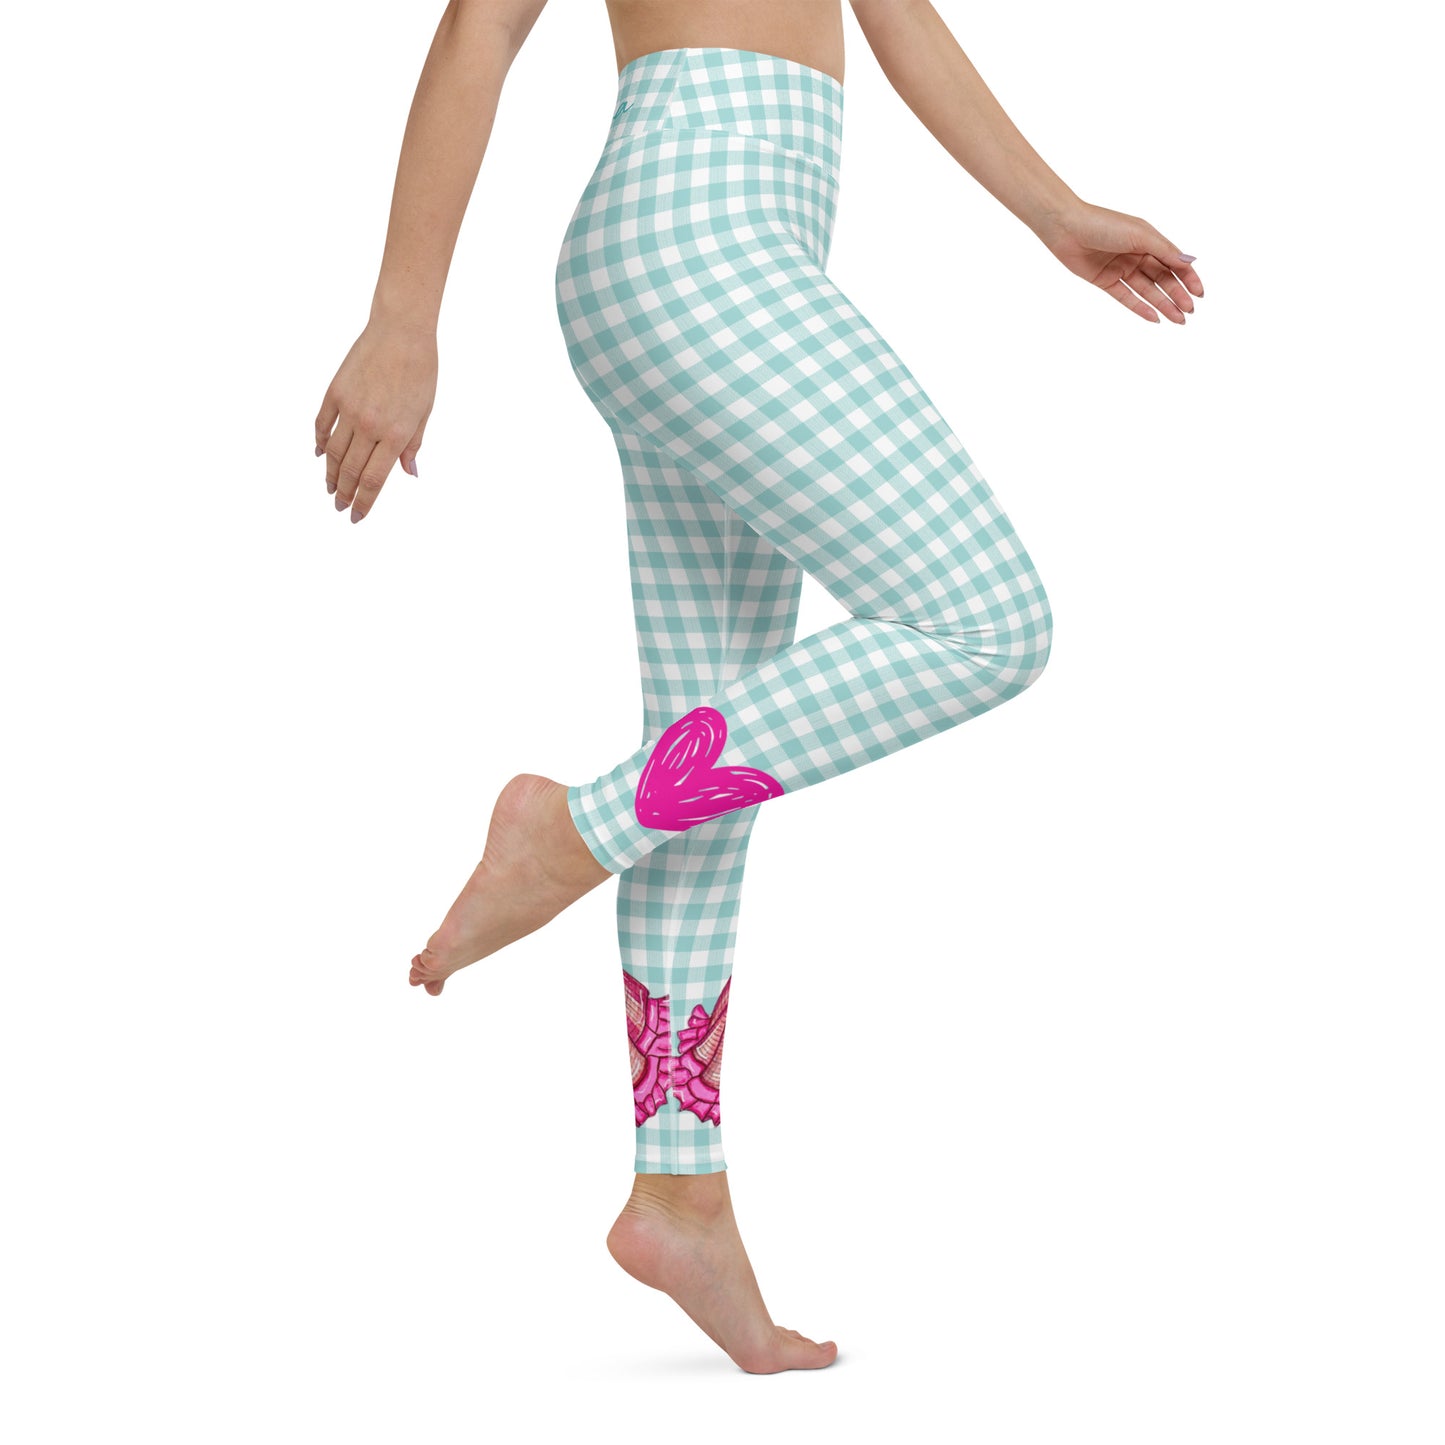 Flamenco Dancer Leggings, green gingham check high waisted yoga leggings with a pink dress design - IllustrArte